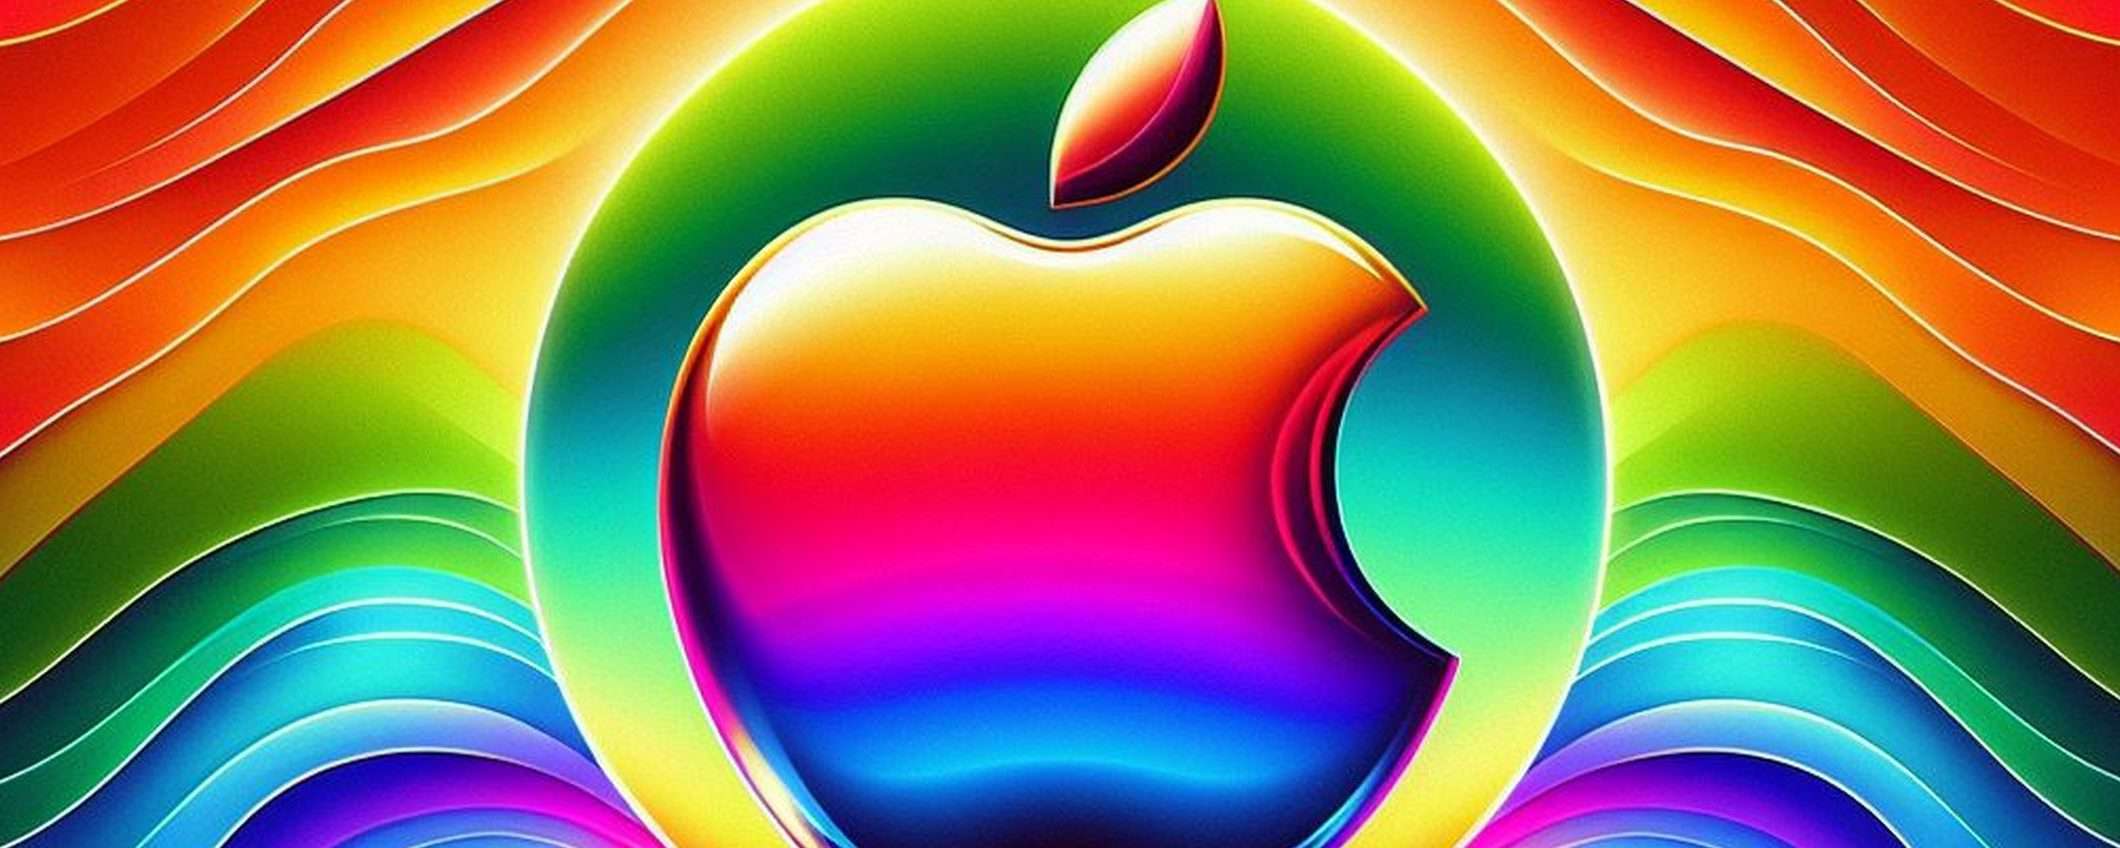 Apple vuole lanciare un Mac con touchscreen